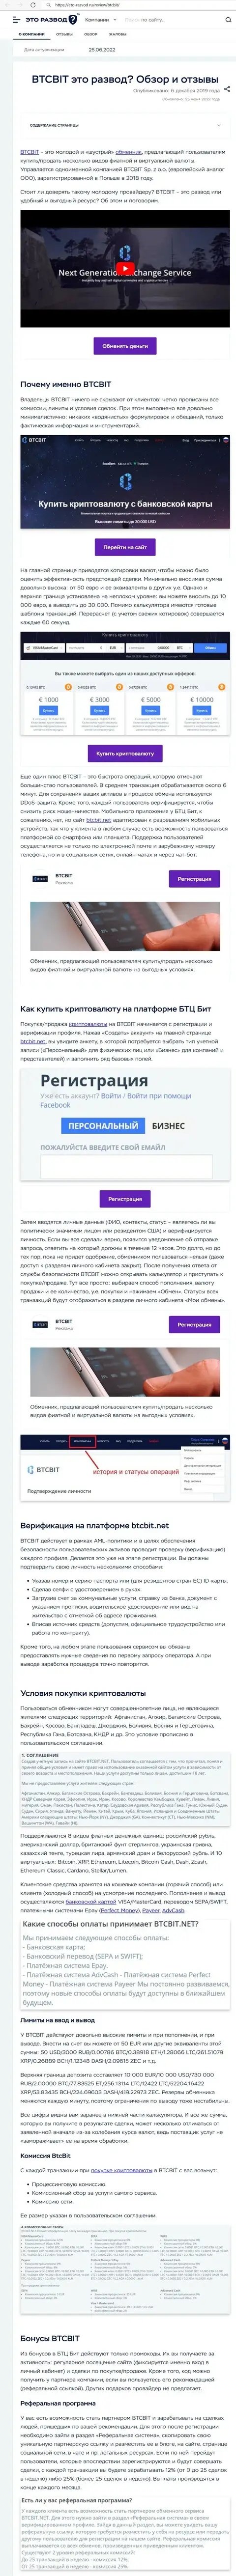 Обзор услуг и условия для совершения сделок обменки БТЦ Бит в публикации на онлайн-ресурсе Eto-Razvod Ru